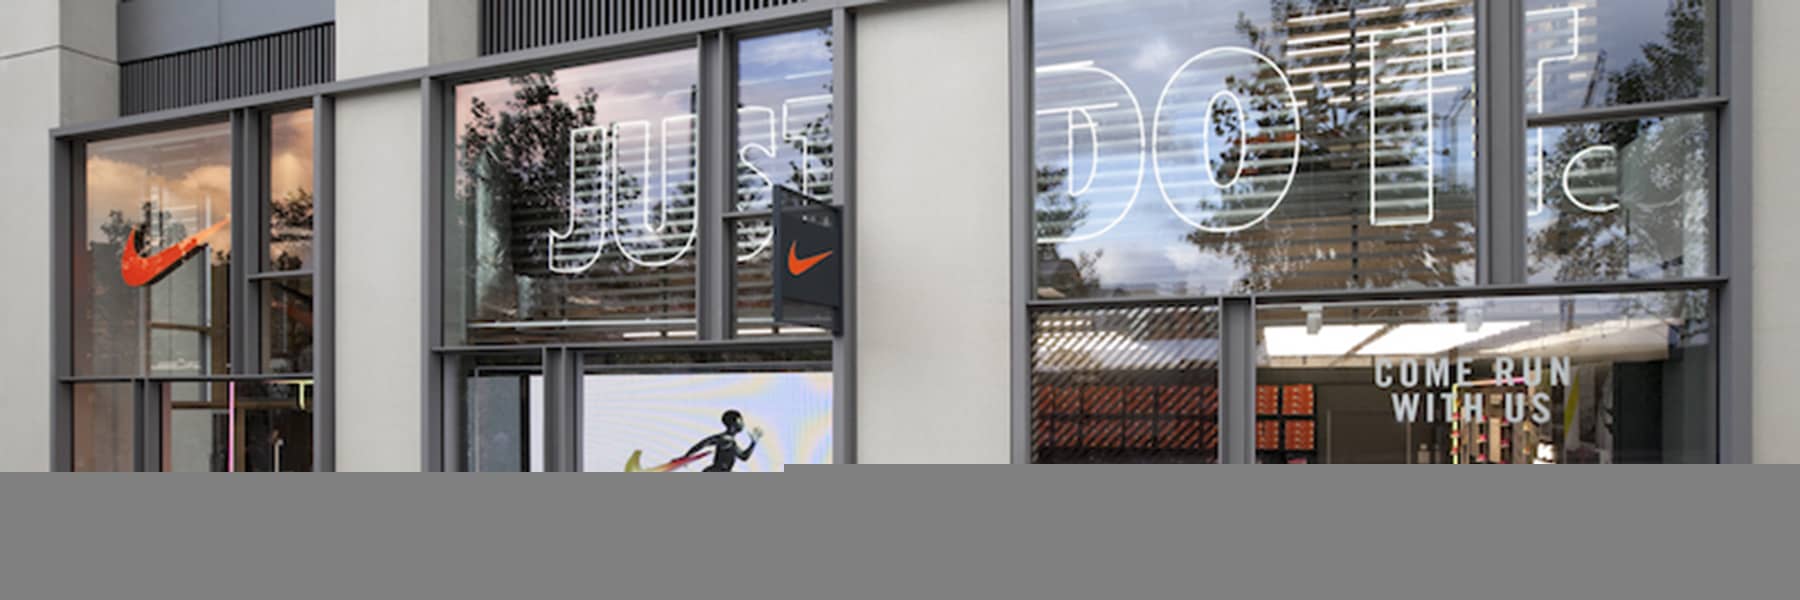 paneel Gespierd Zelfrespect Nike Factory Store Lyon. Vaulx-en-Velin, FRA. Nike.com